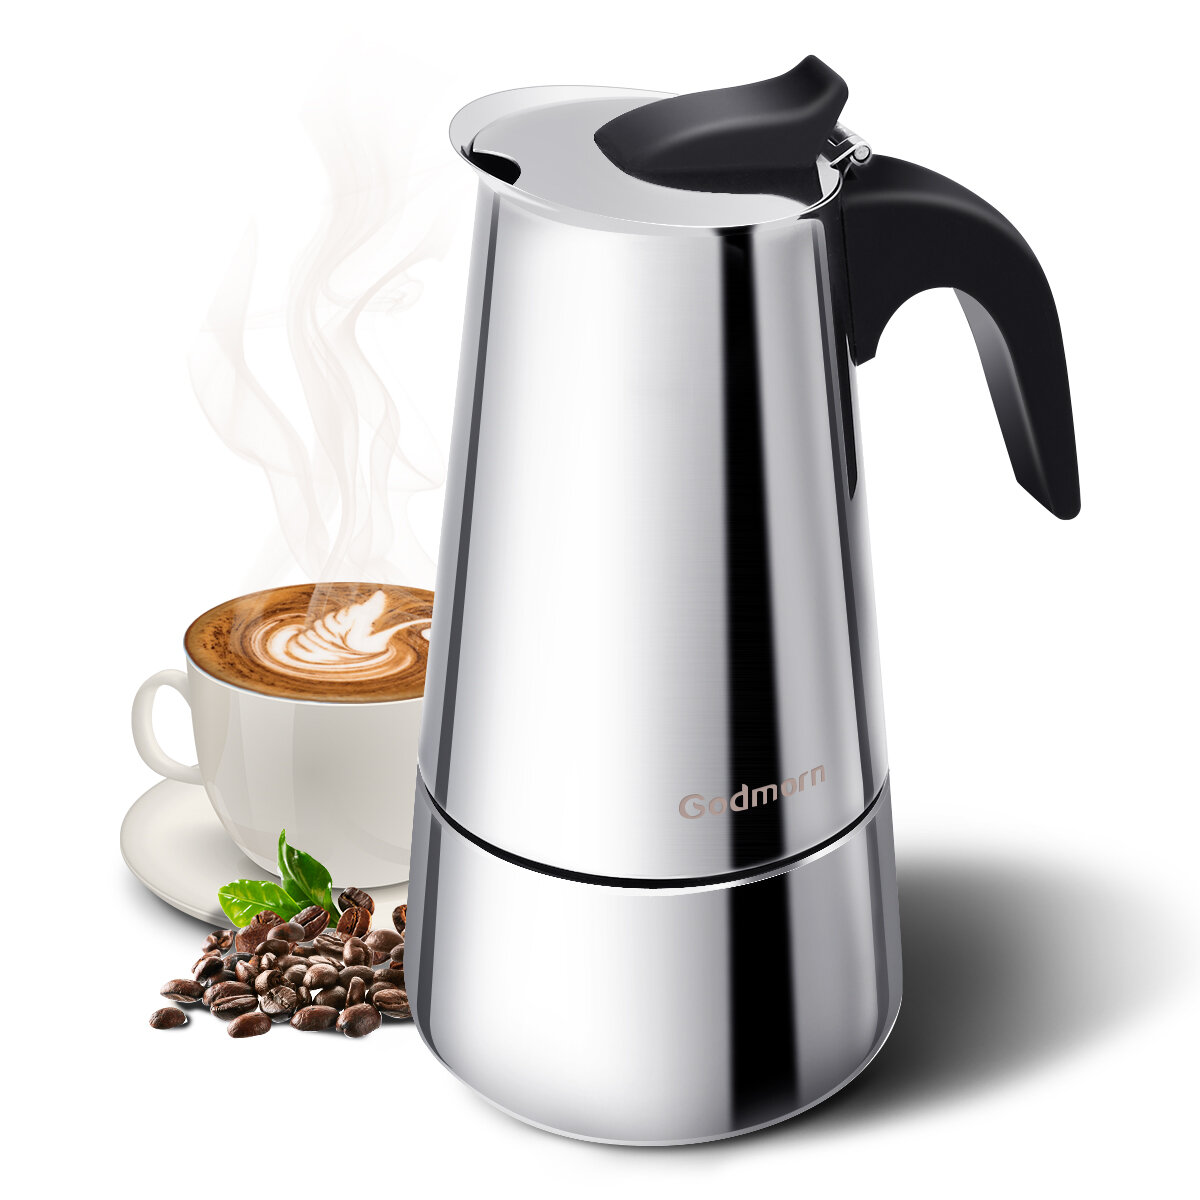 

Godmorn Stovetop Espresso Maker, Moka Pot, Percolator Italian Coffee Maker, 300ml/10oz/6 cup (espresso cup=50ml), Classi